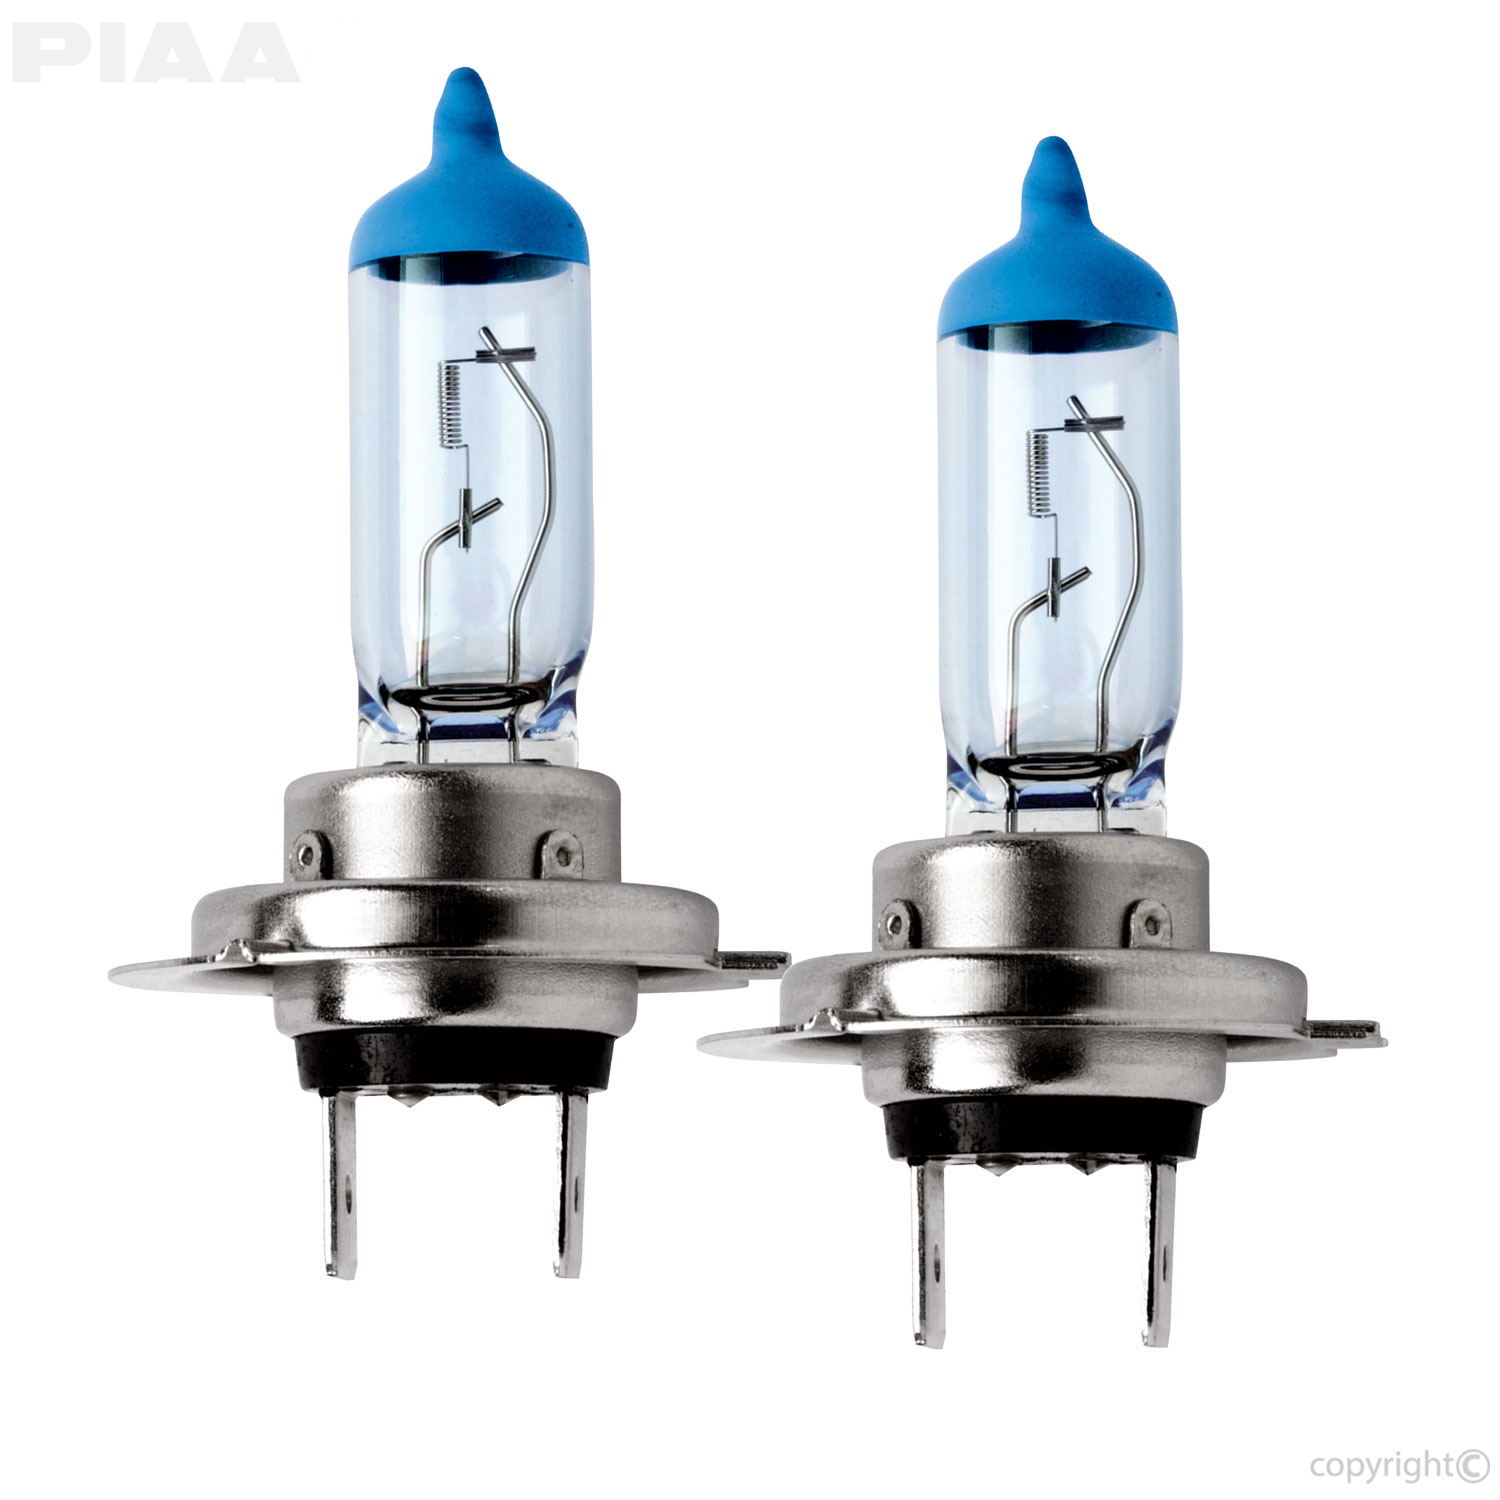 PIAA  H7 XTreme White Plus Twin Pack Halogen Bulbs #17655